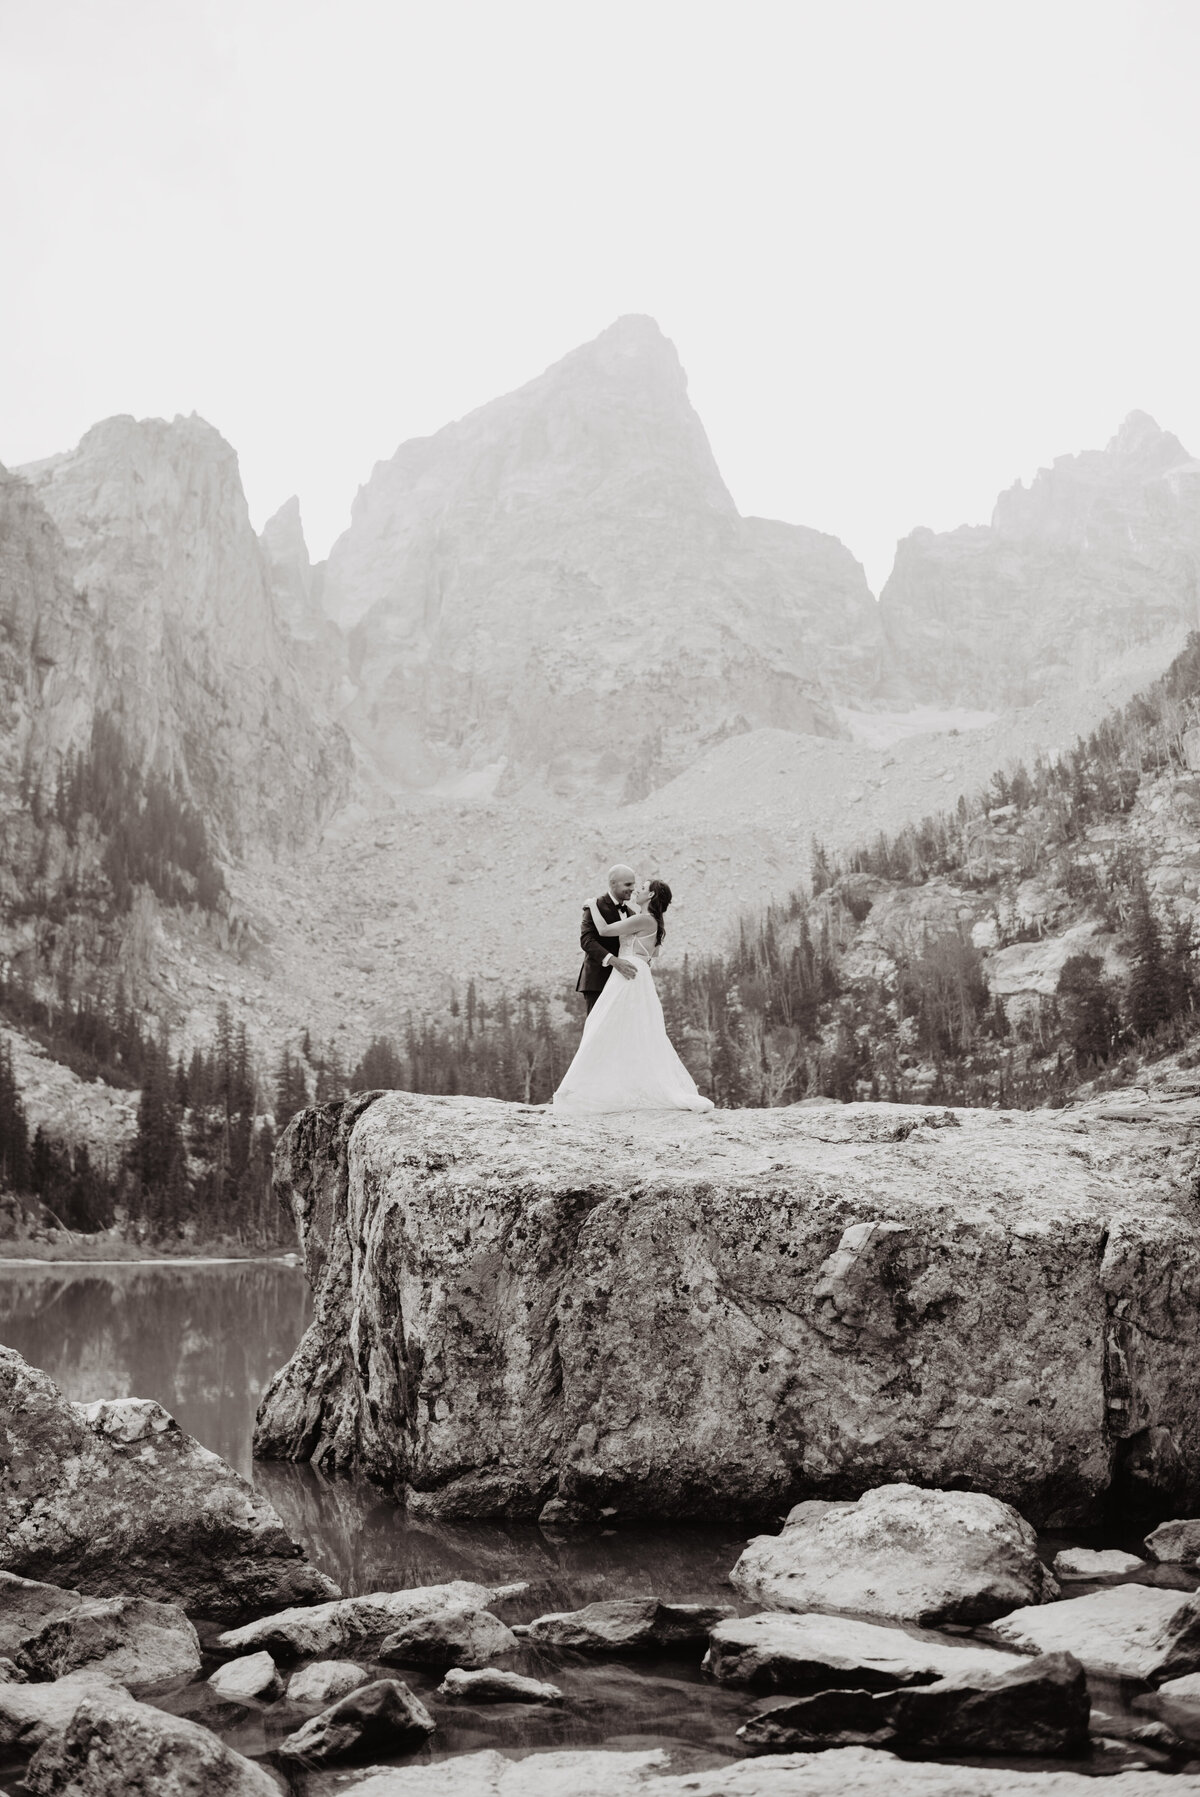 Jackson Hole photographers capture bride and groom hugging